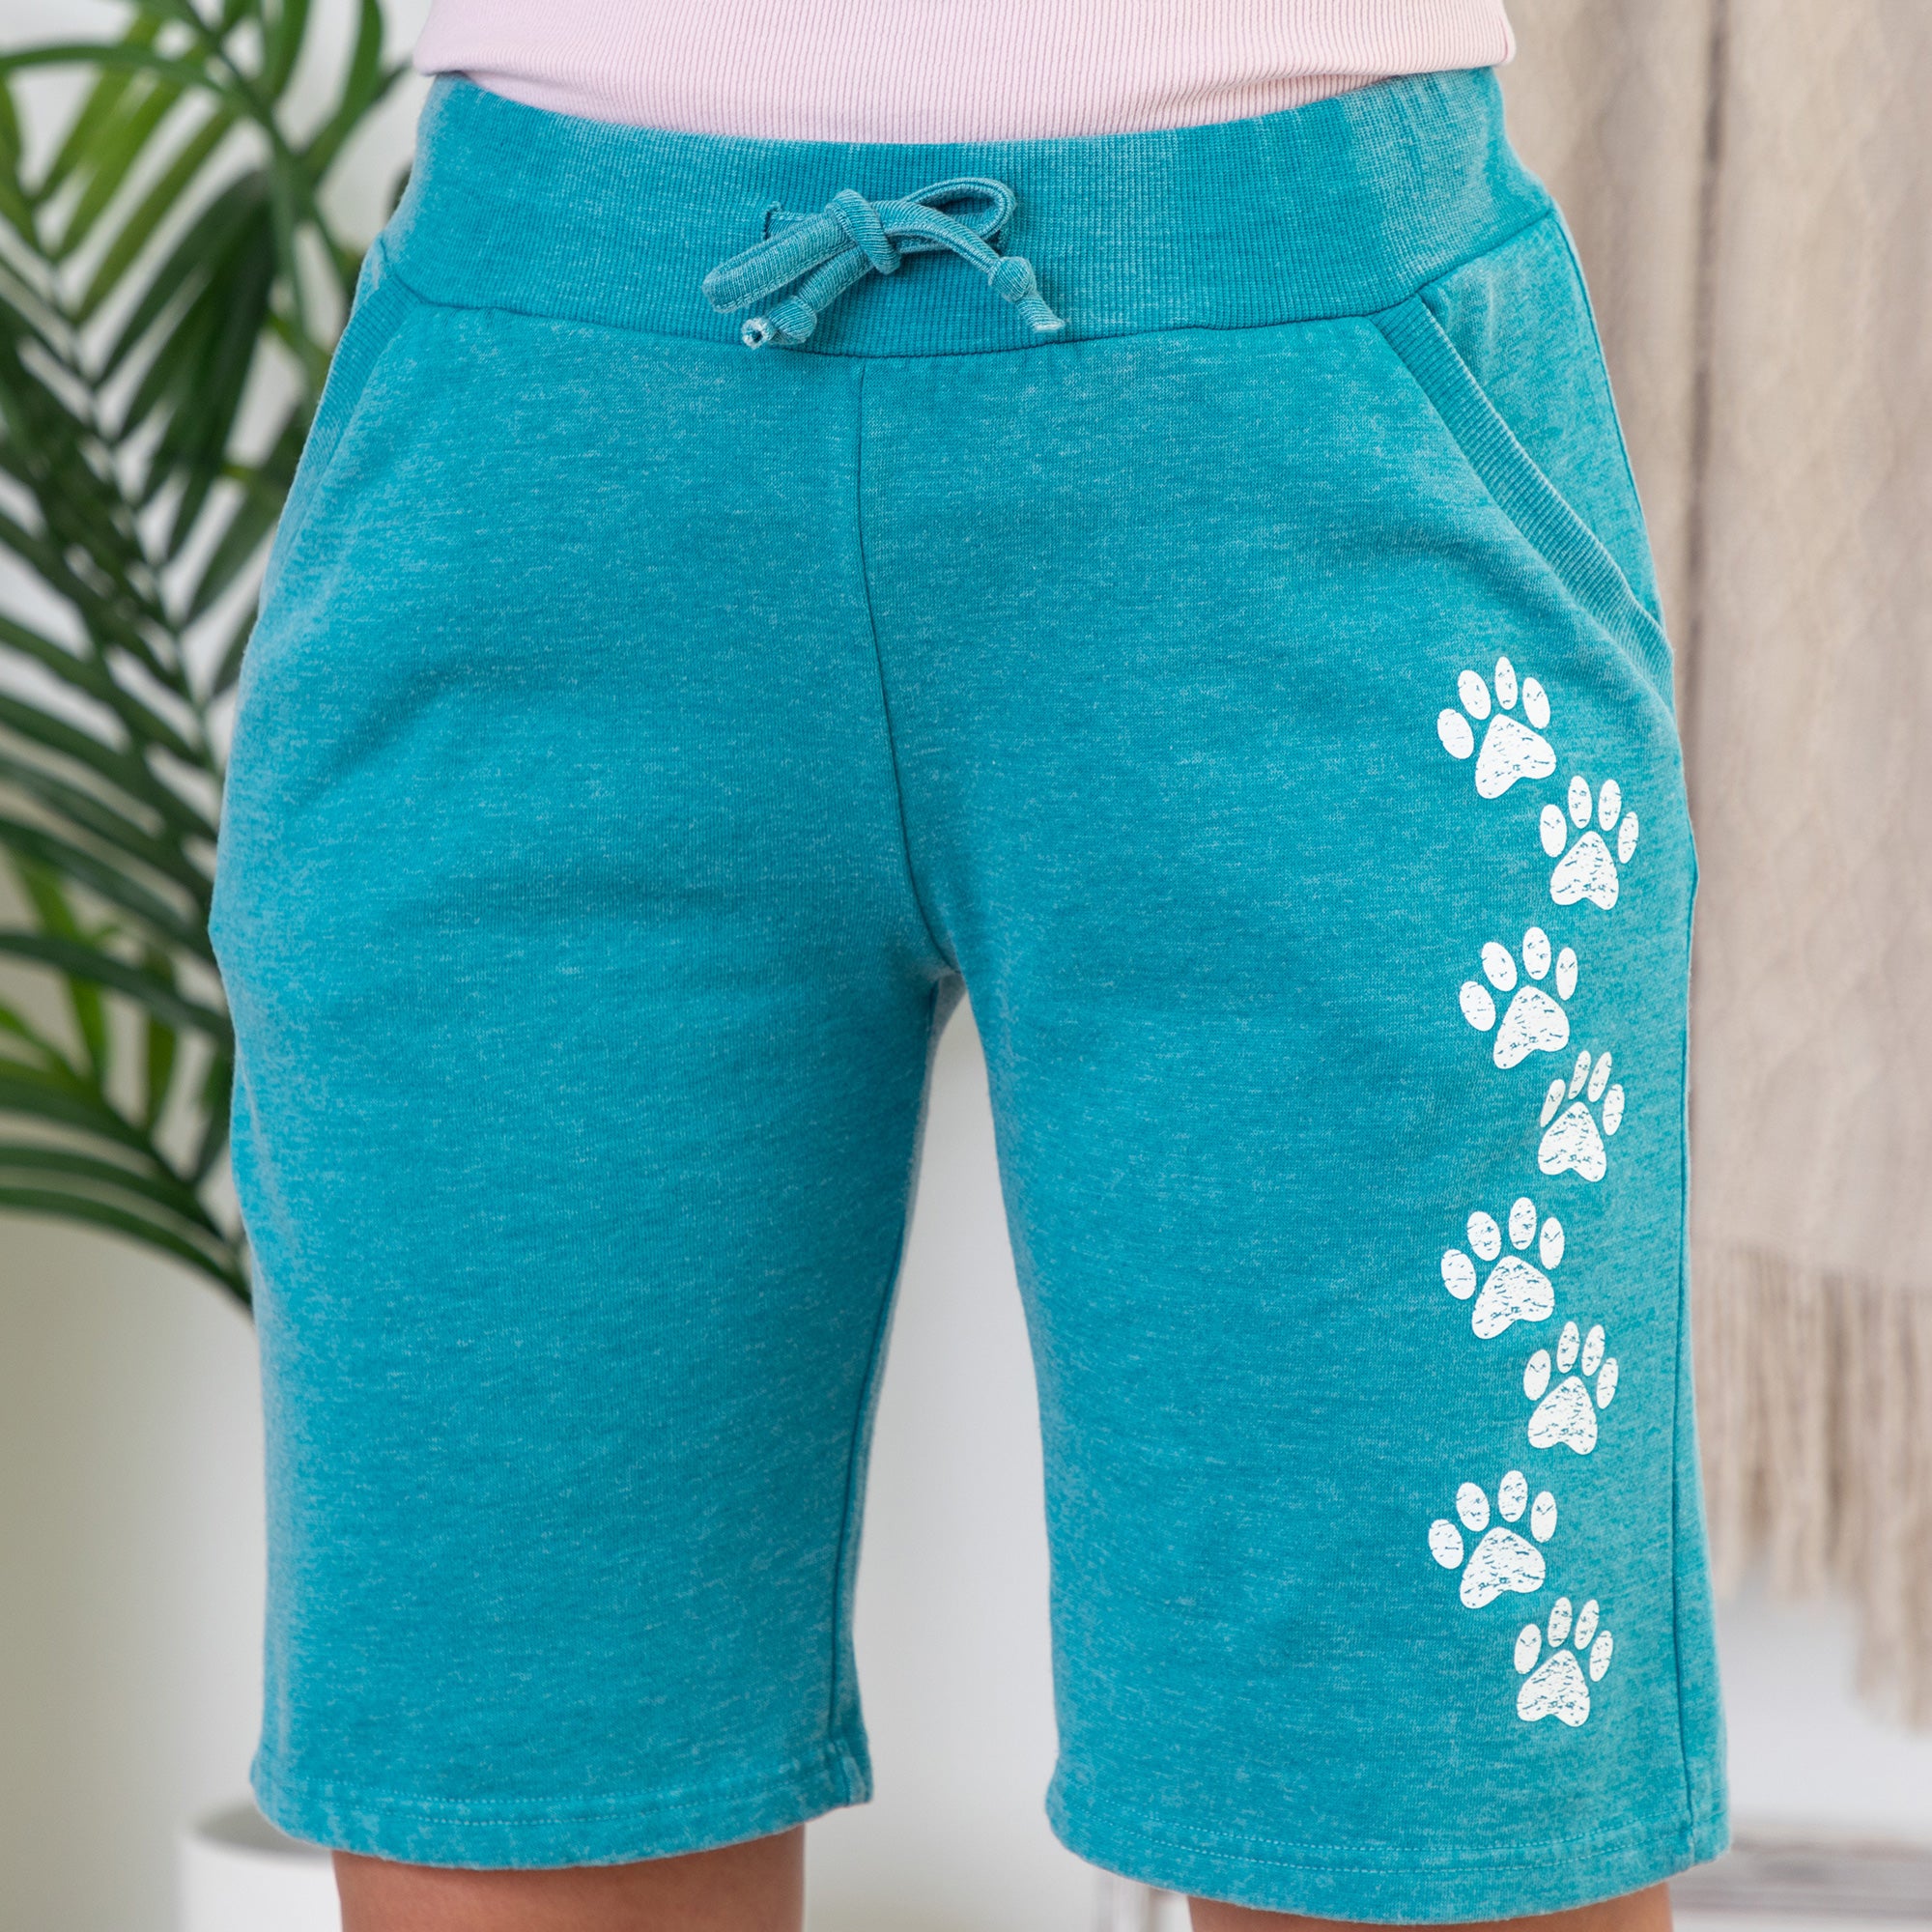 Walking Paws Burnout Board Shorts - Turquoise - M